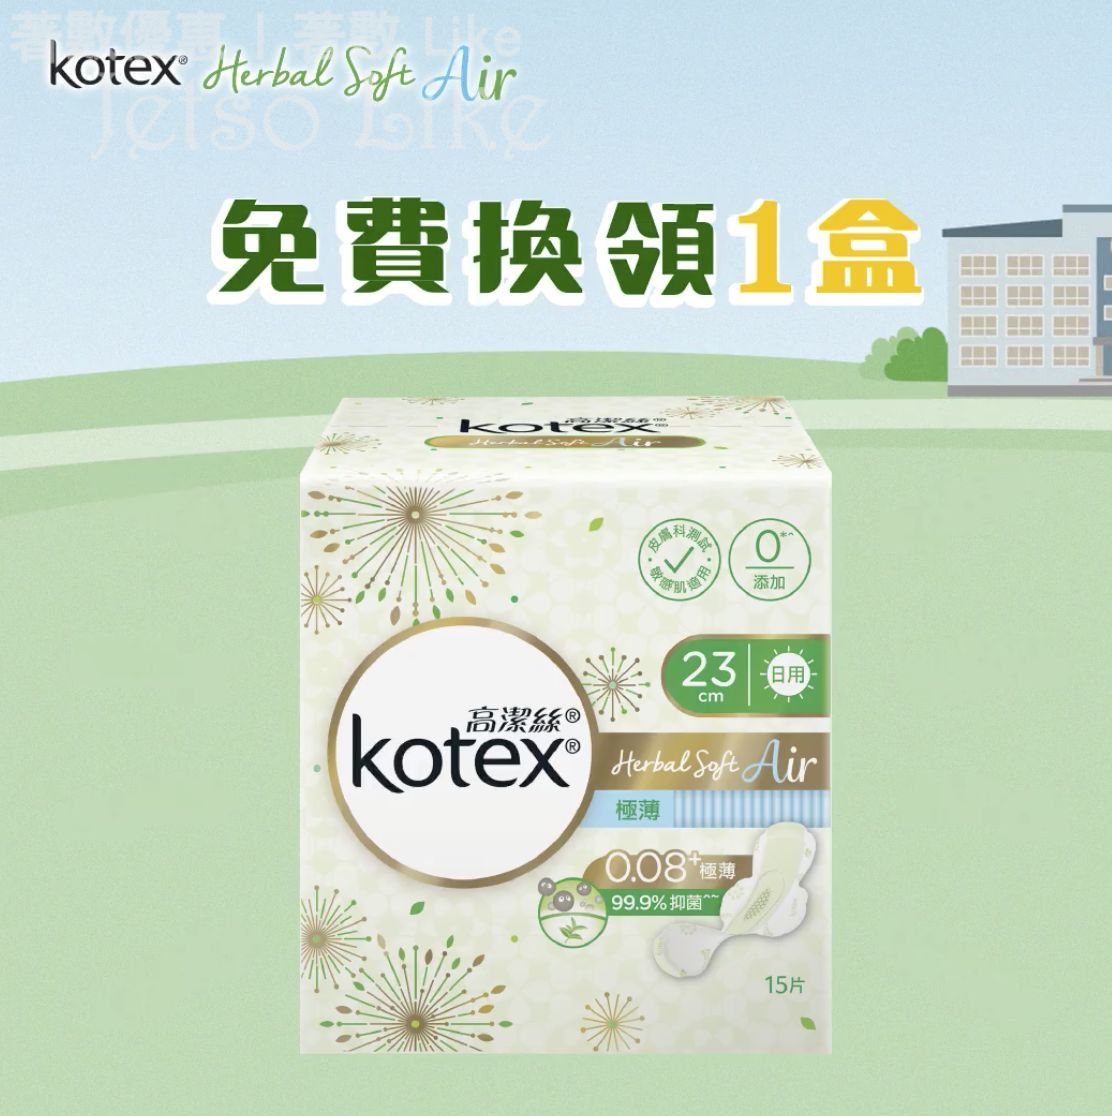 Kotex 高潔絲 免費換全盒Herbal Soft Air 15/Apr